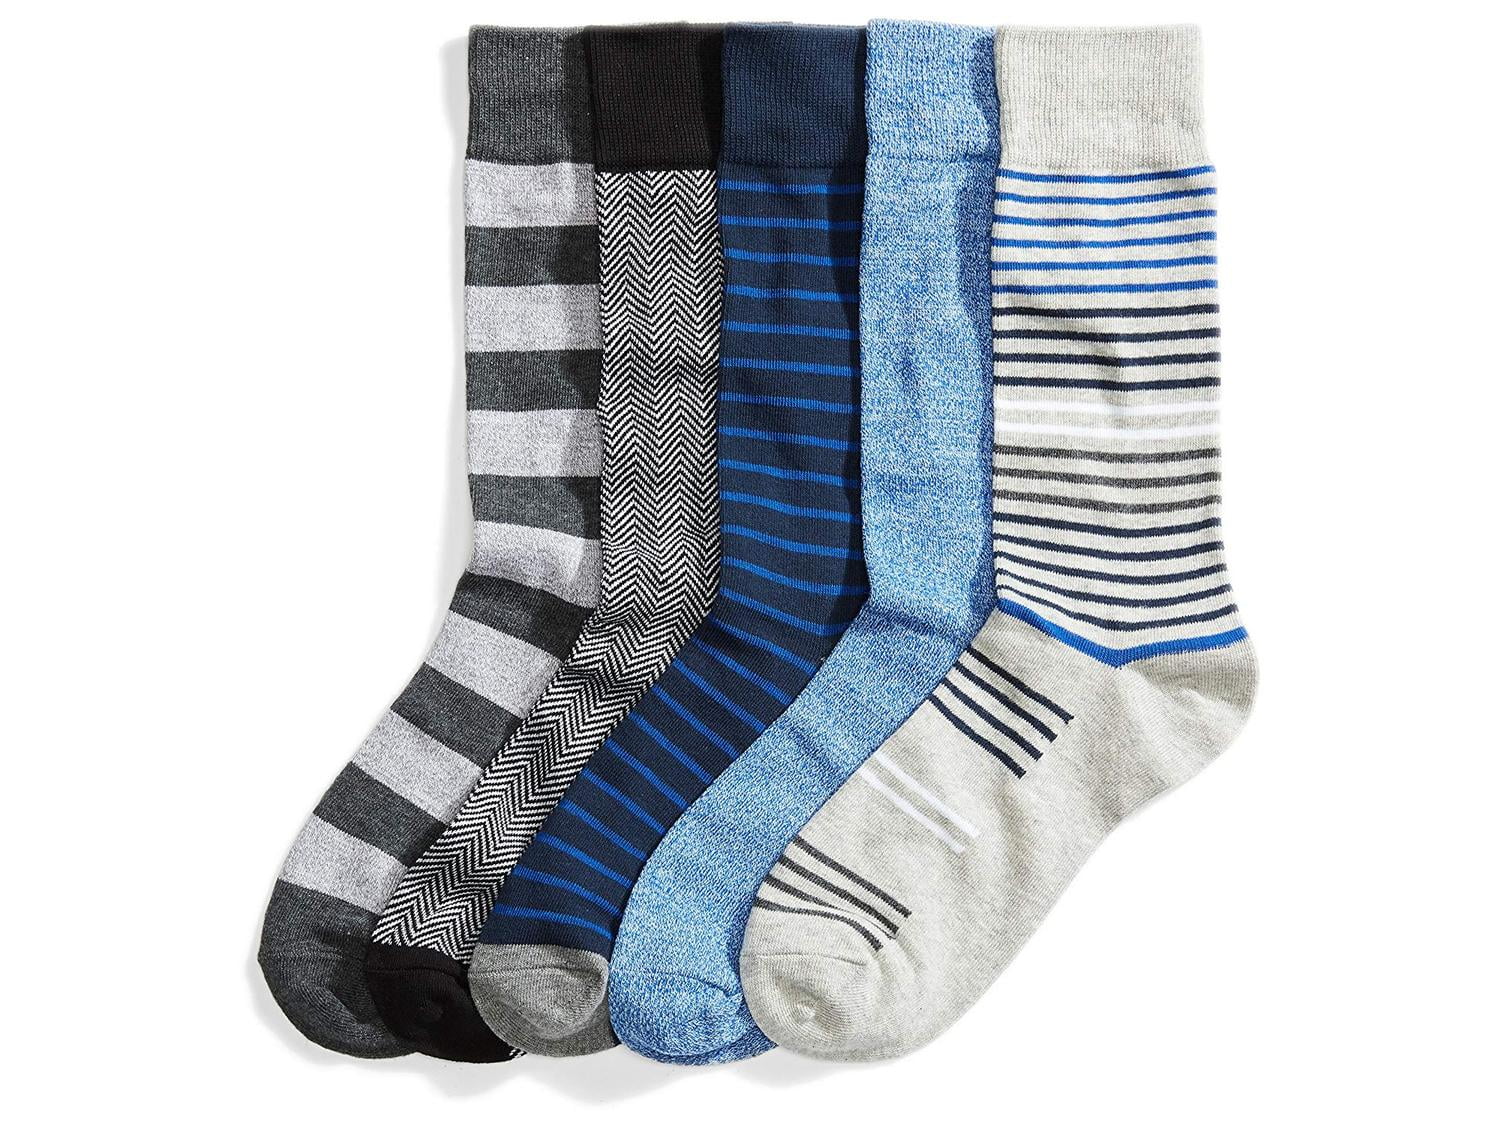 Photo 1 of Goodthreads Men's 5-Pack Patterned Socks, Assorted, Assorted Cobalt, Size 8.0